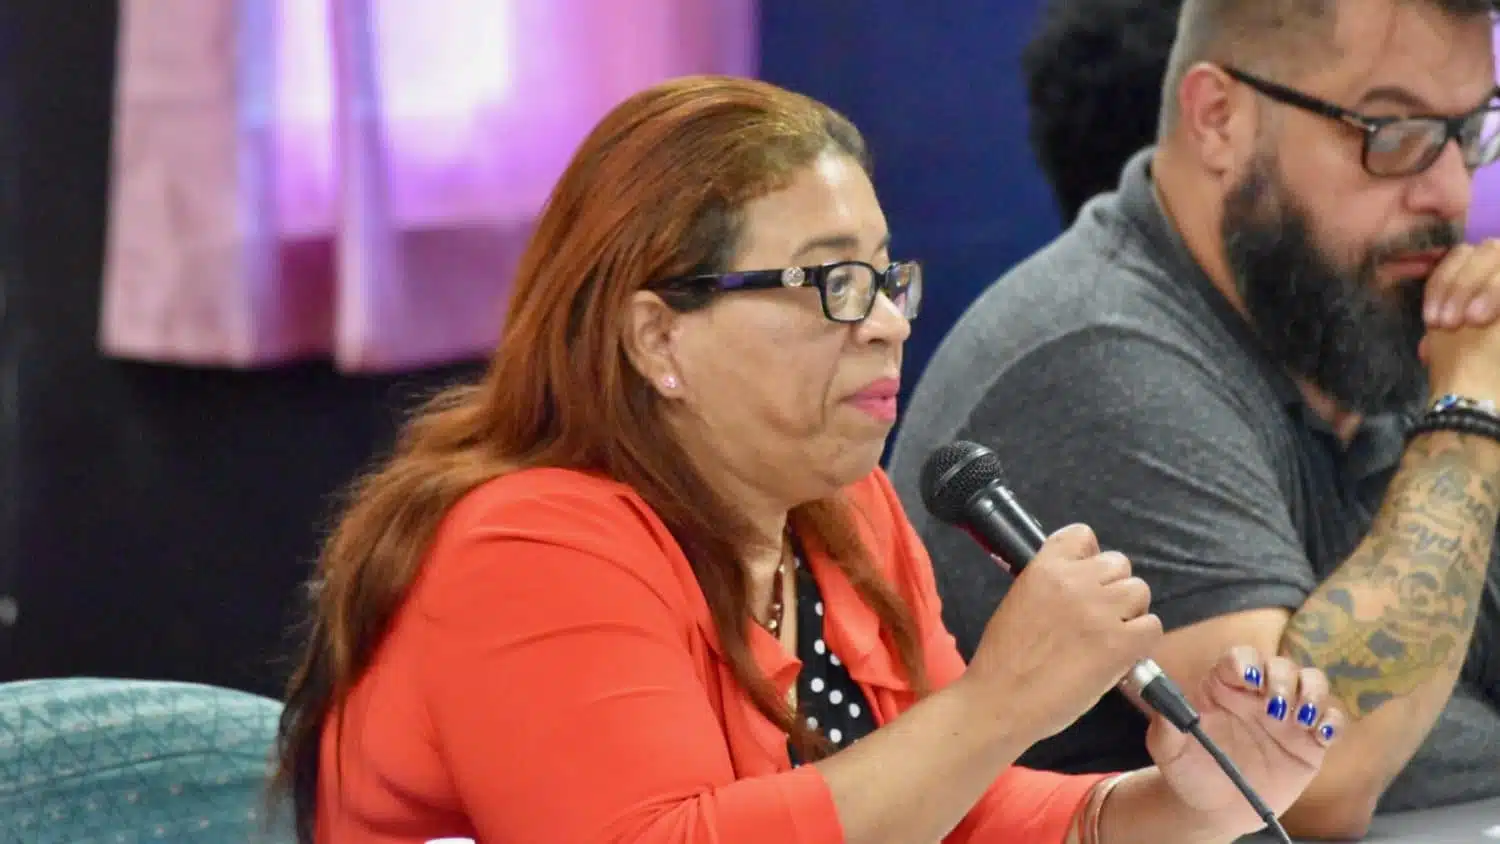 Councilmember Castillo walks back her support for defunding police